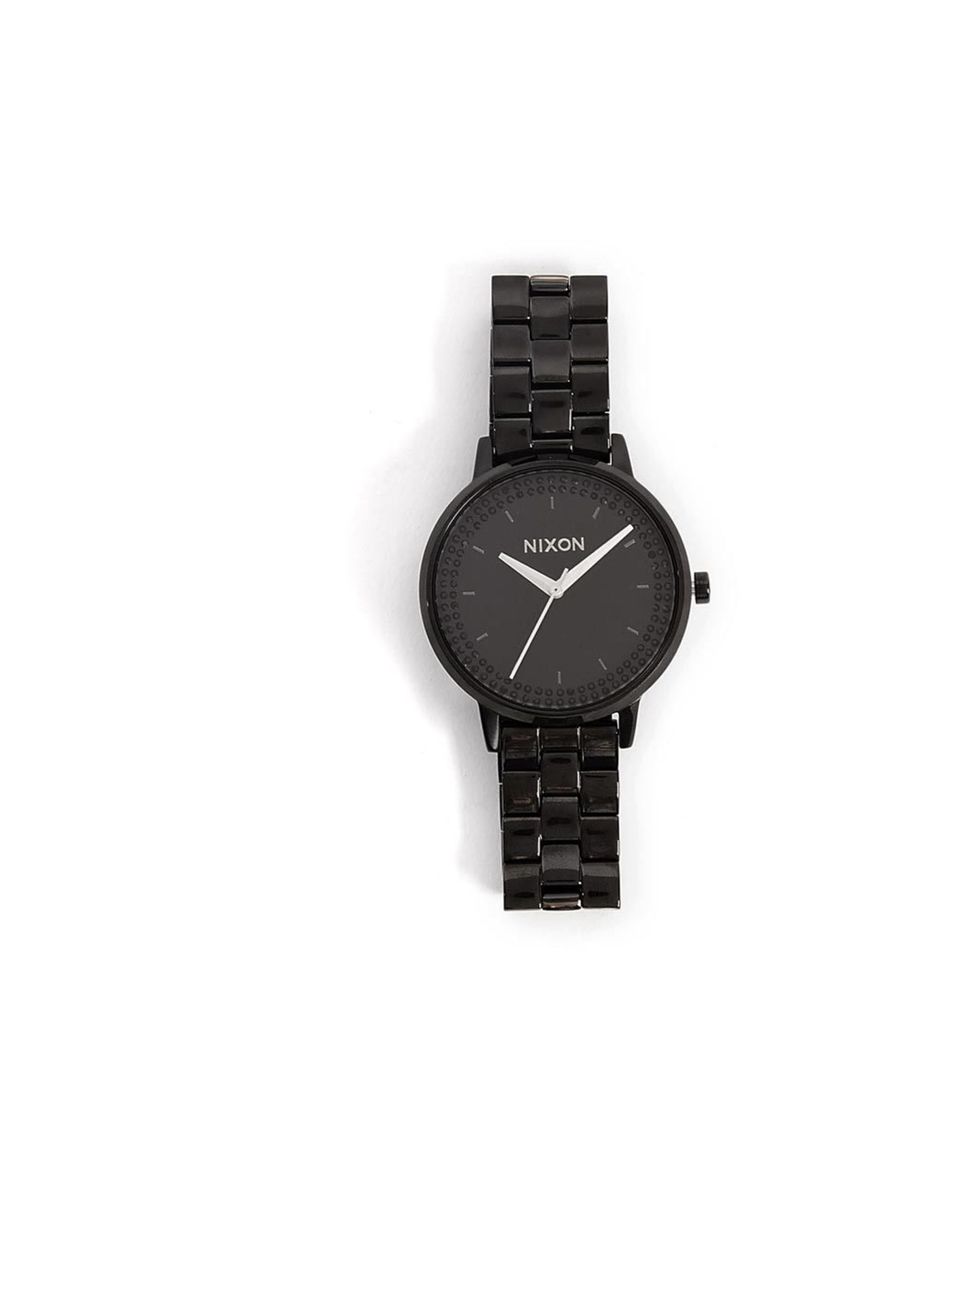 <p>Nixon 'Kensington' black crystal embellished watch, £160, at <a href="http://www.my-wardrobe.com/nixon/the-kensington-black-crystal-embellished-watch-290164">my-wardrobe.com</a></p>